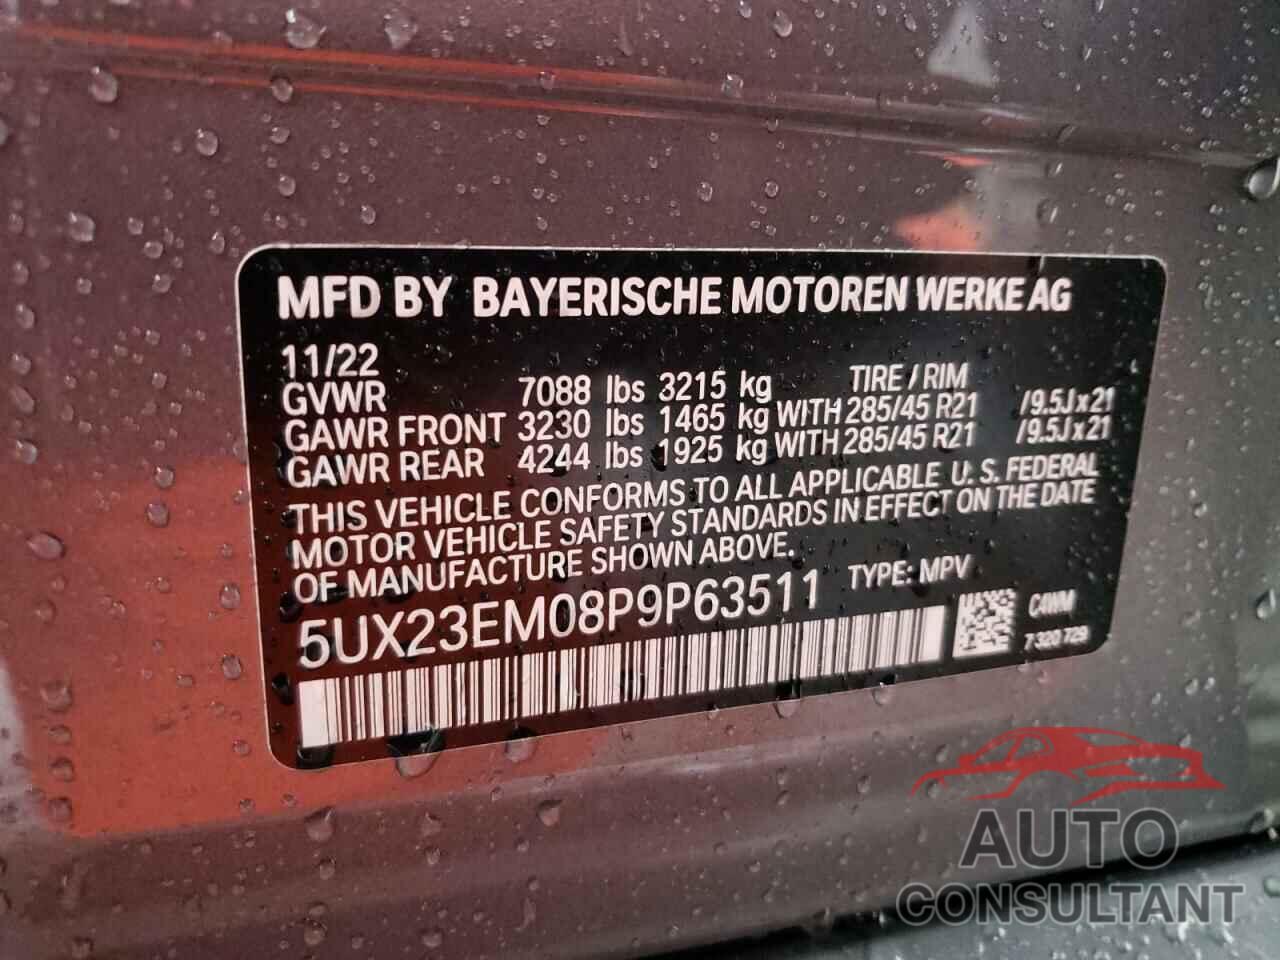 BMW X7 2023 - 5UX23EM08P9P63511